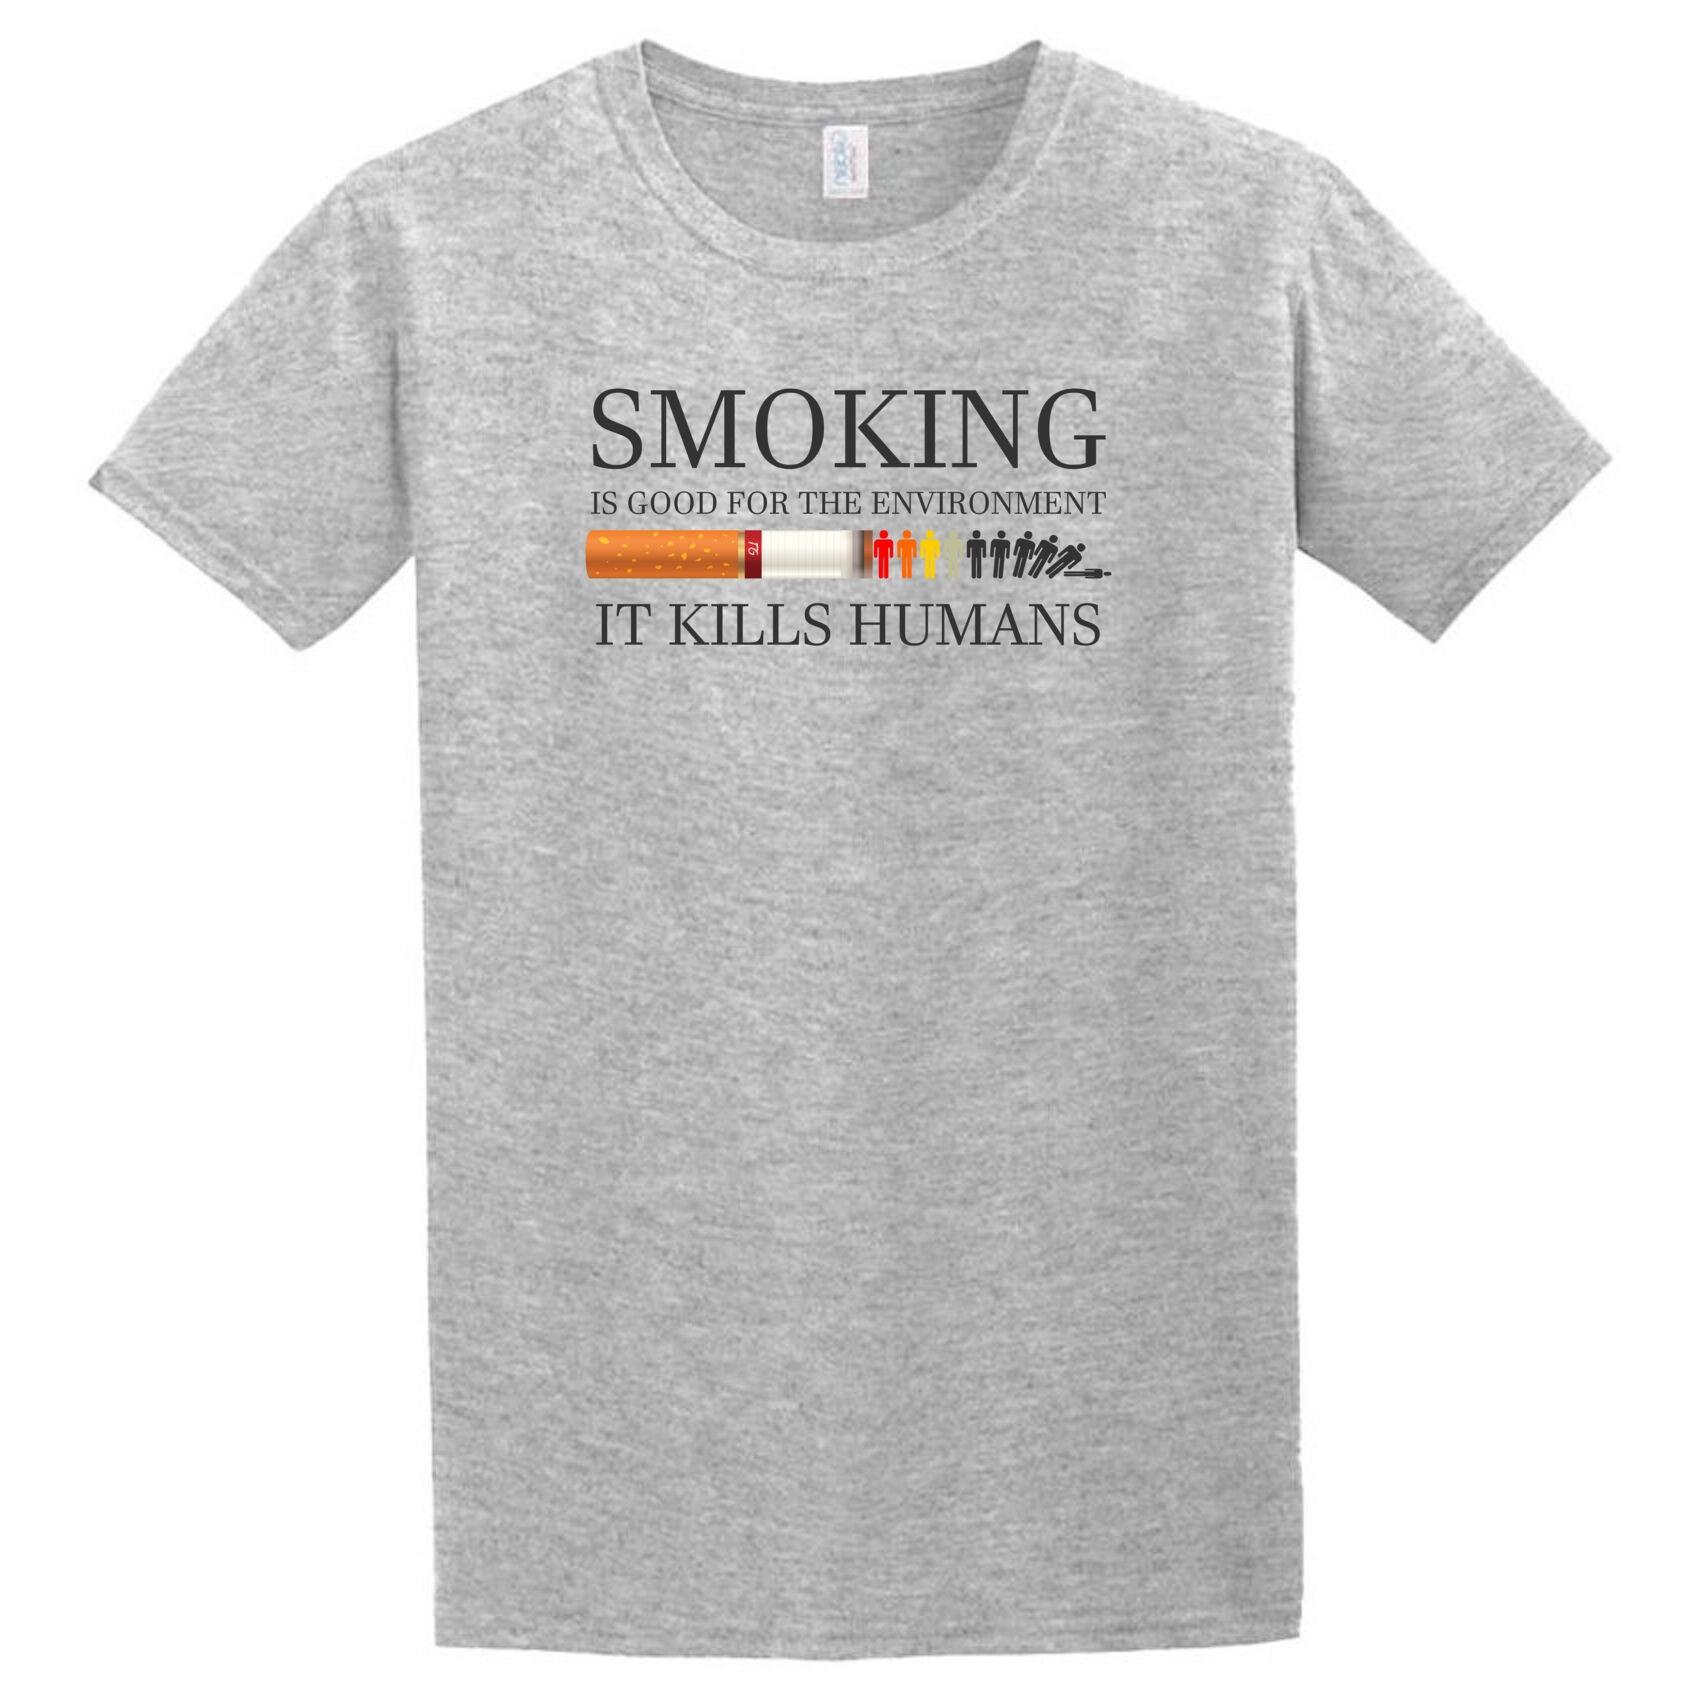 Twisted Gifts' Smoking Kills T-Shirt.